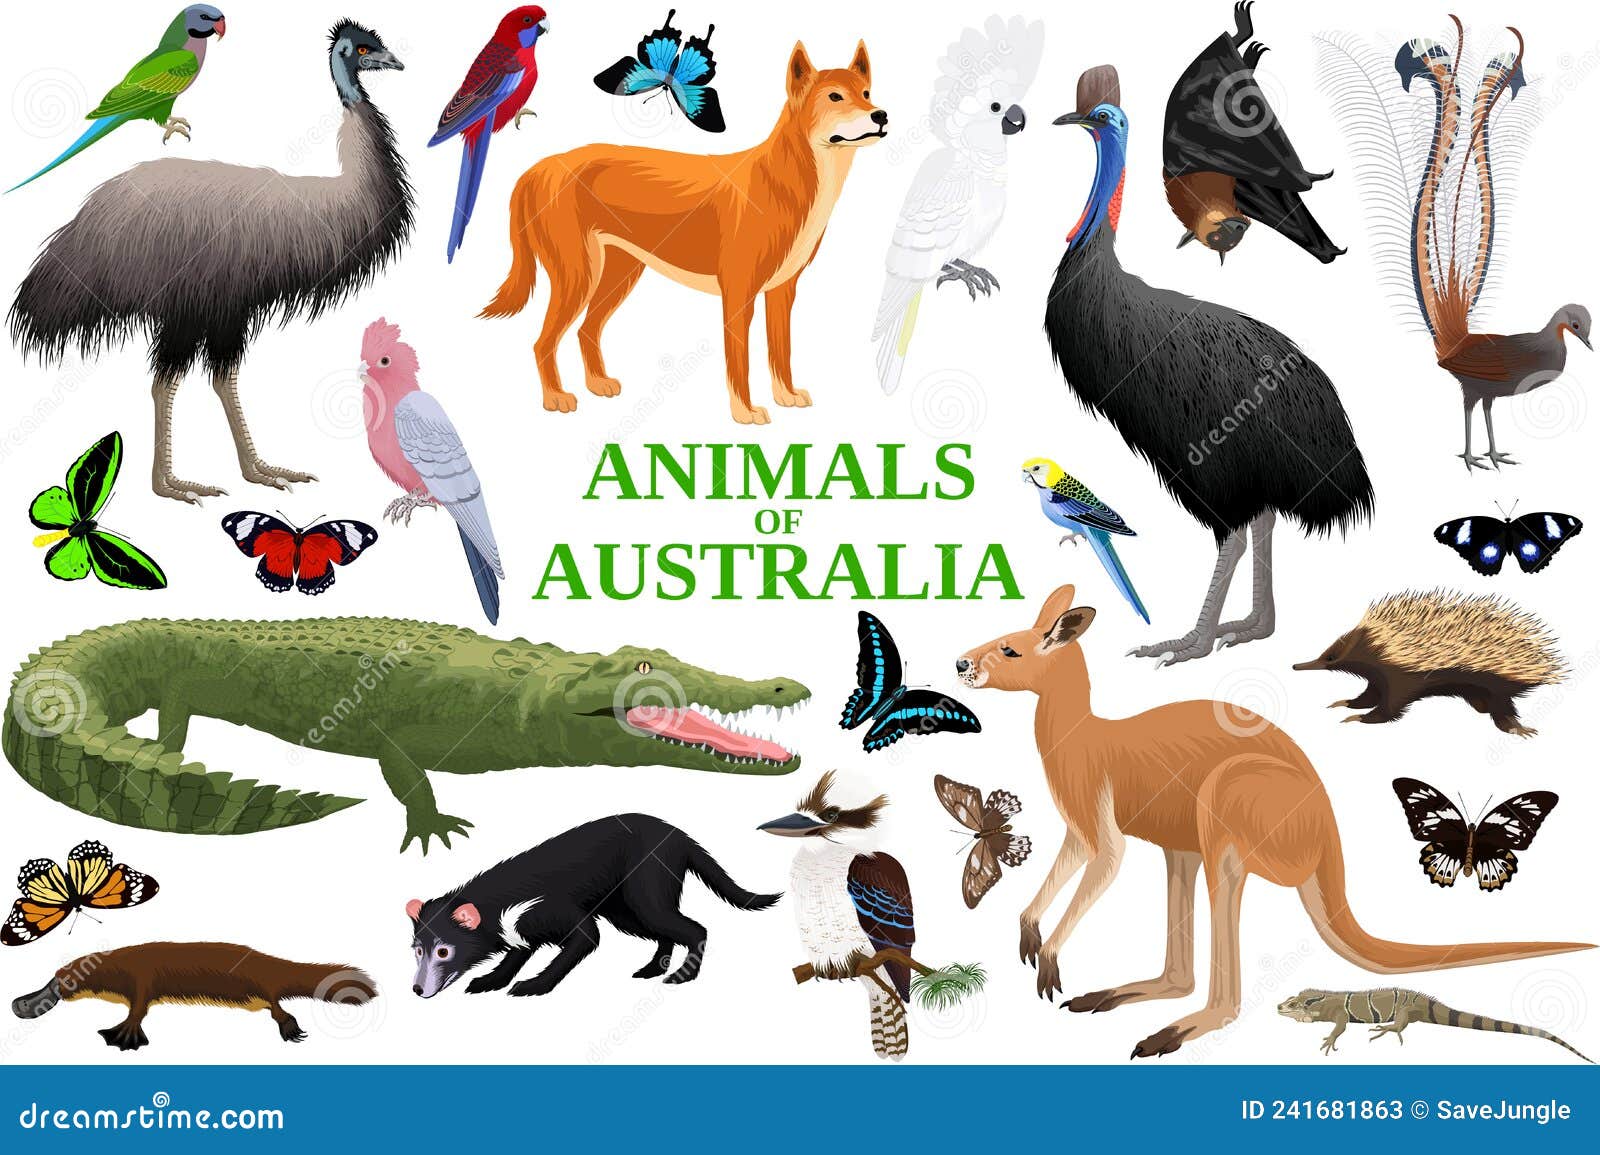 Conjunto Vectorial Aves De Australia Reptiles Insectos Y Reptiles. Stock ilustración - Ilustración loro, desaparecido: 241681863